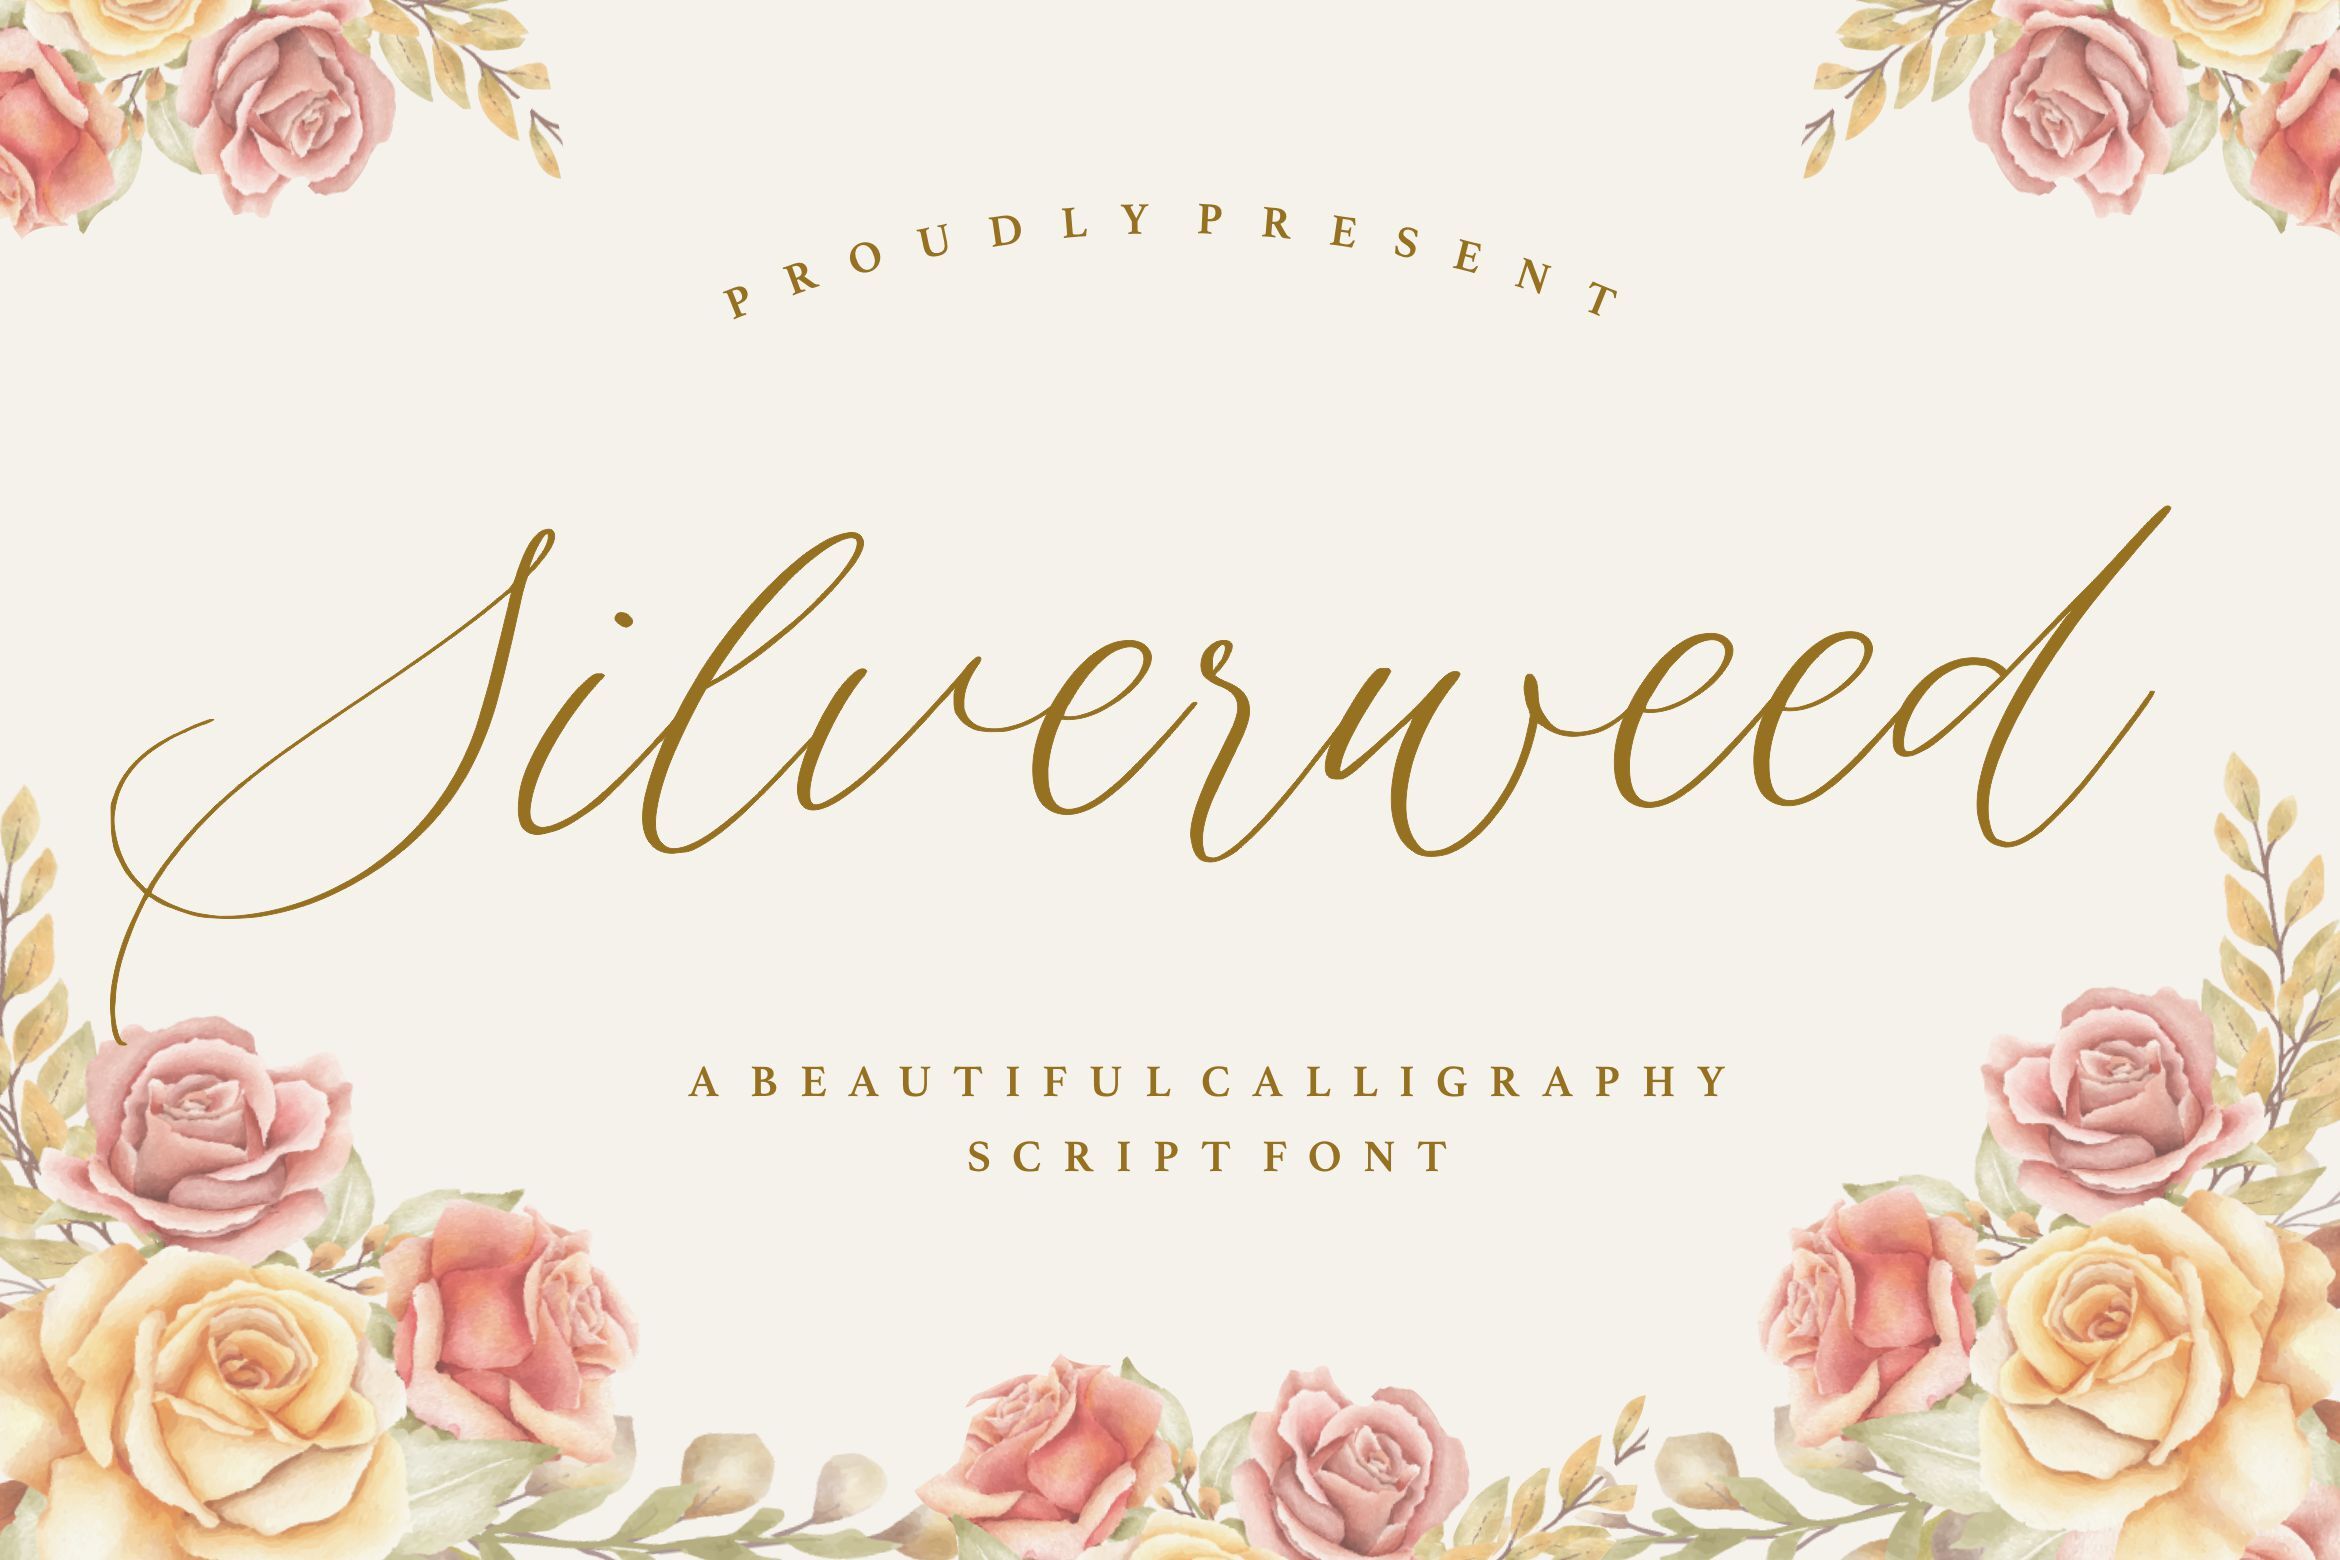 Silverweed Beautiful Calligraphy Script Font By Balpirick Studio Thehungryjpeg Com